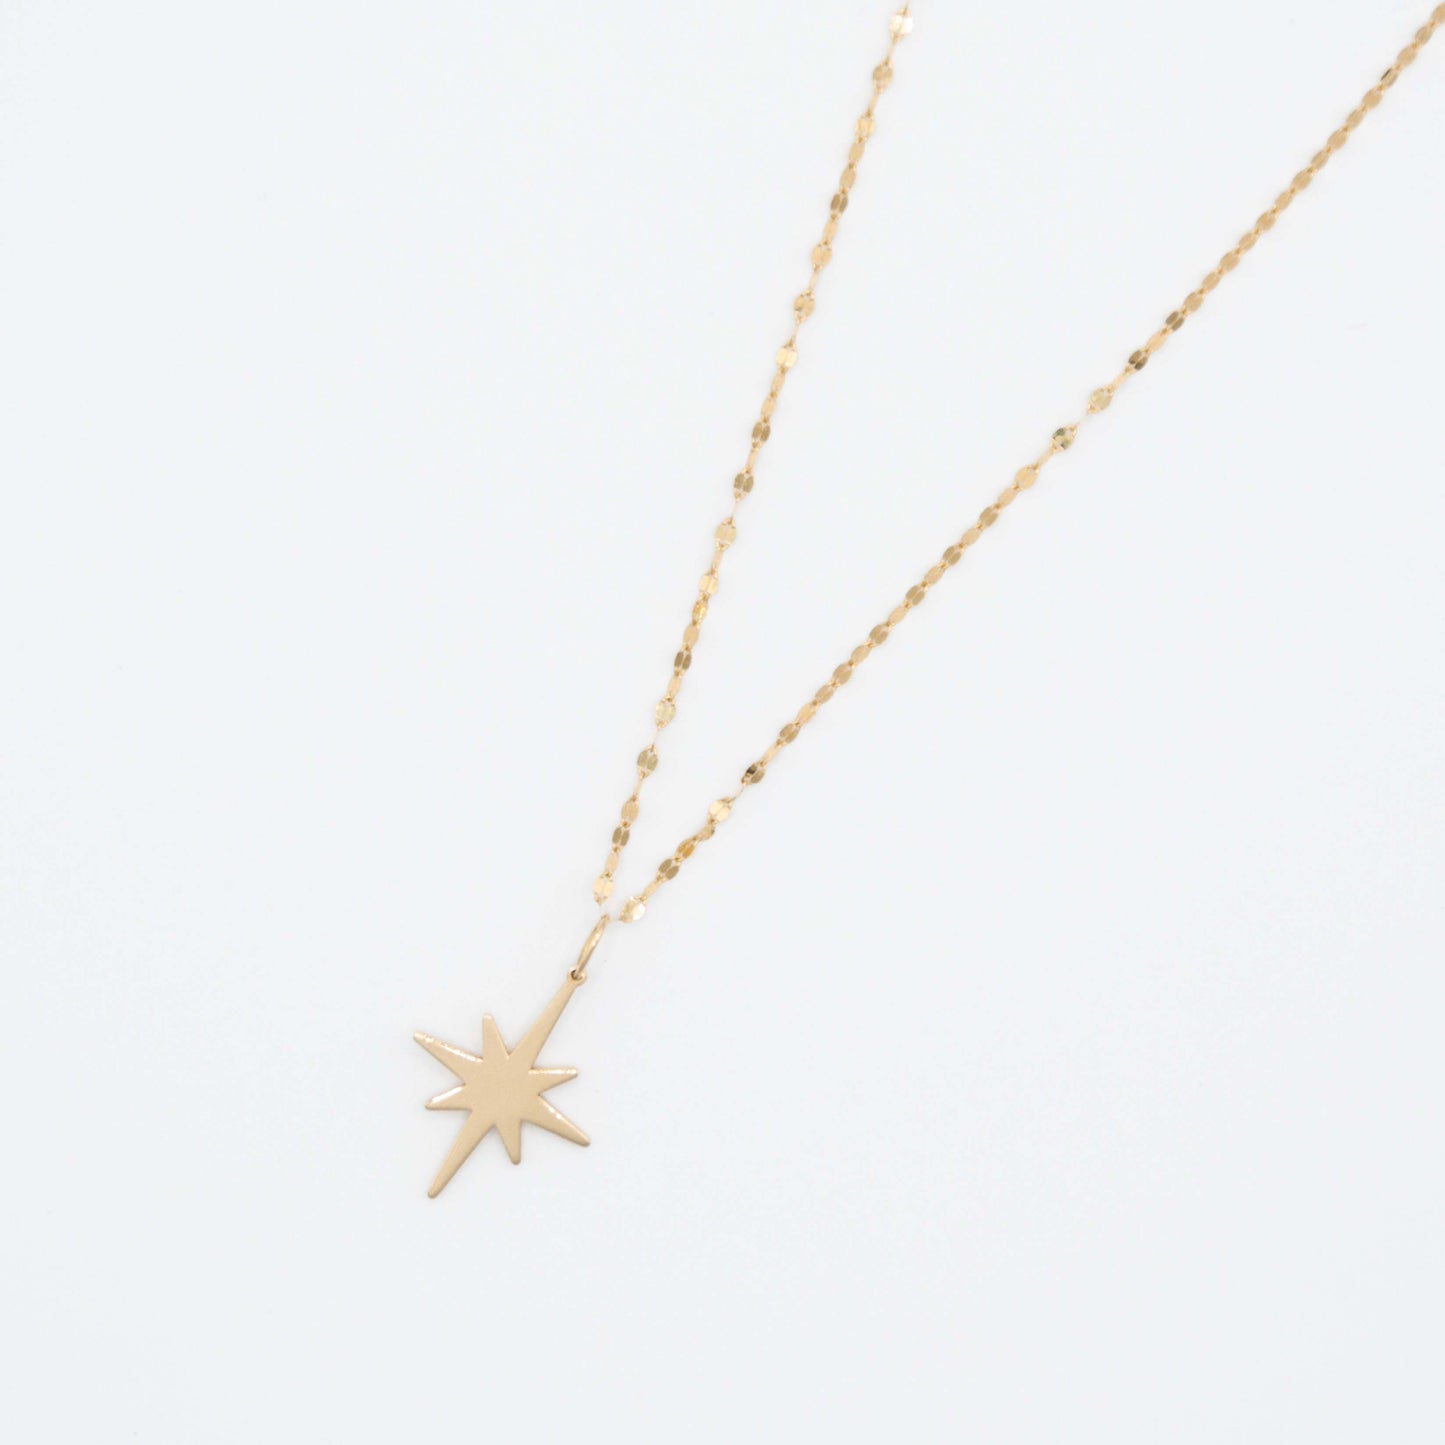 Golden Snowflake Necklace